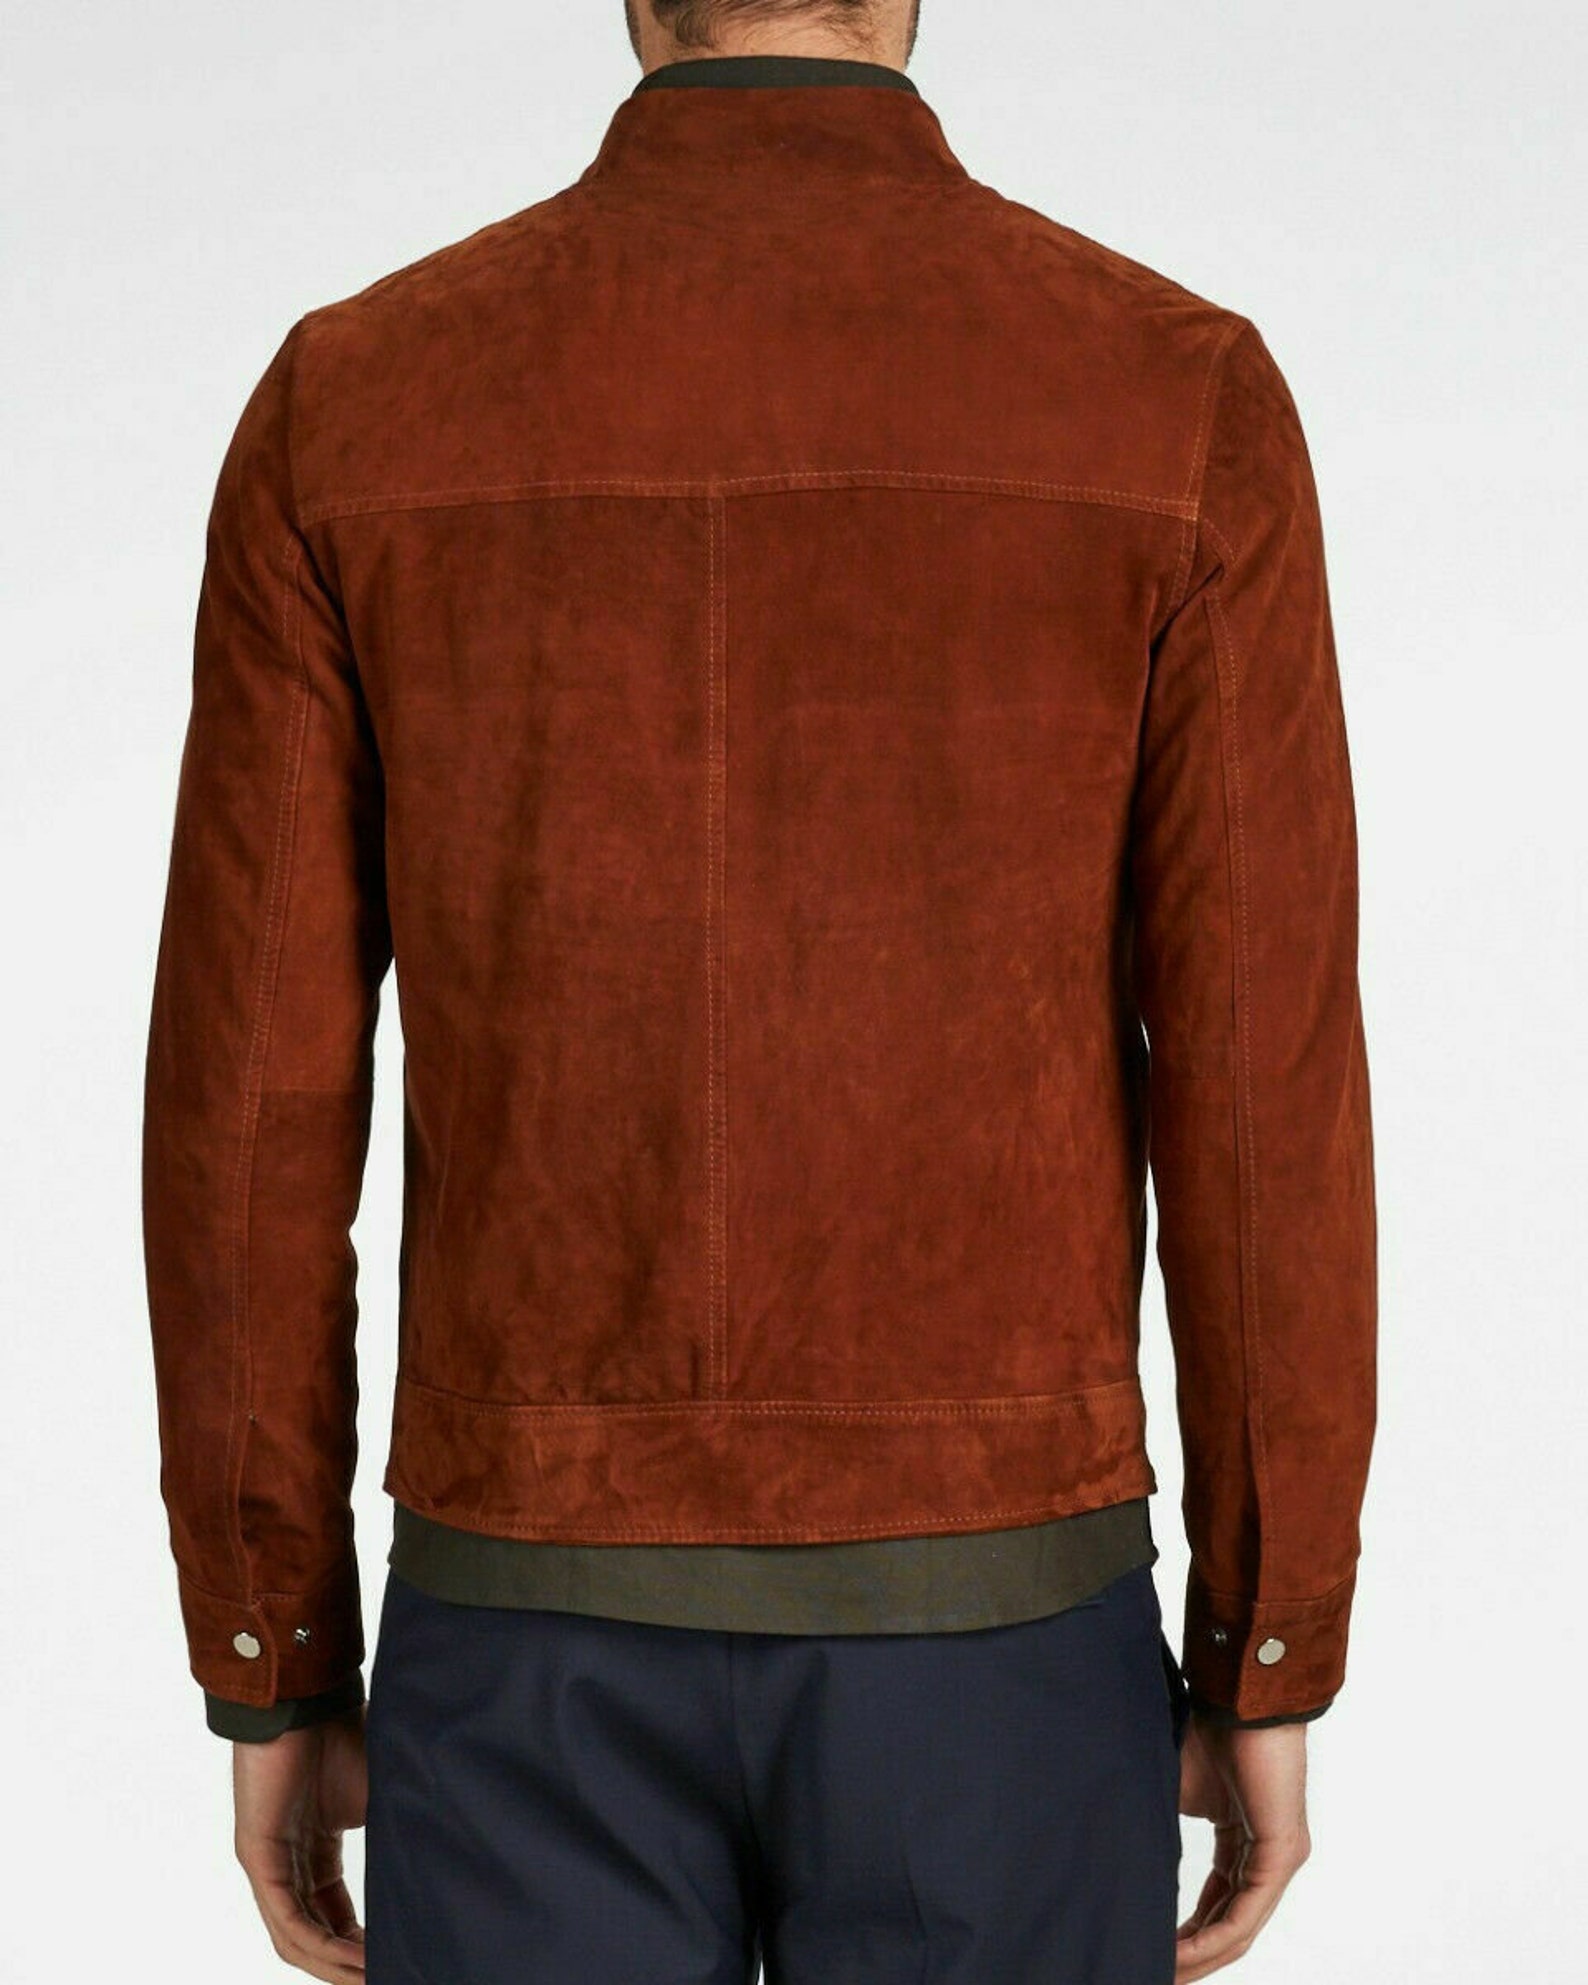 New Men's Sheepskin Suede 100% Leather Jacket Biker Brown - Etsy